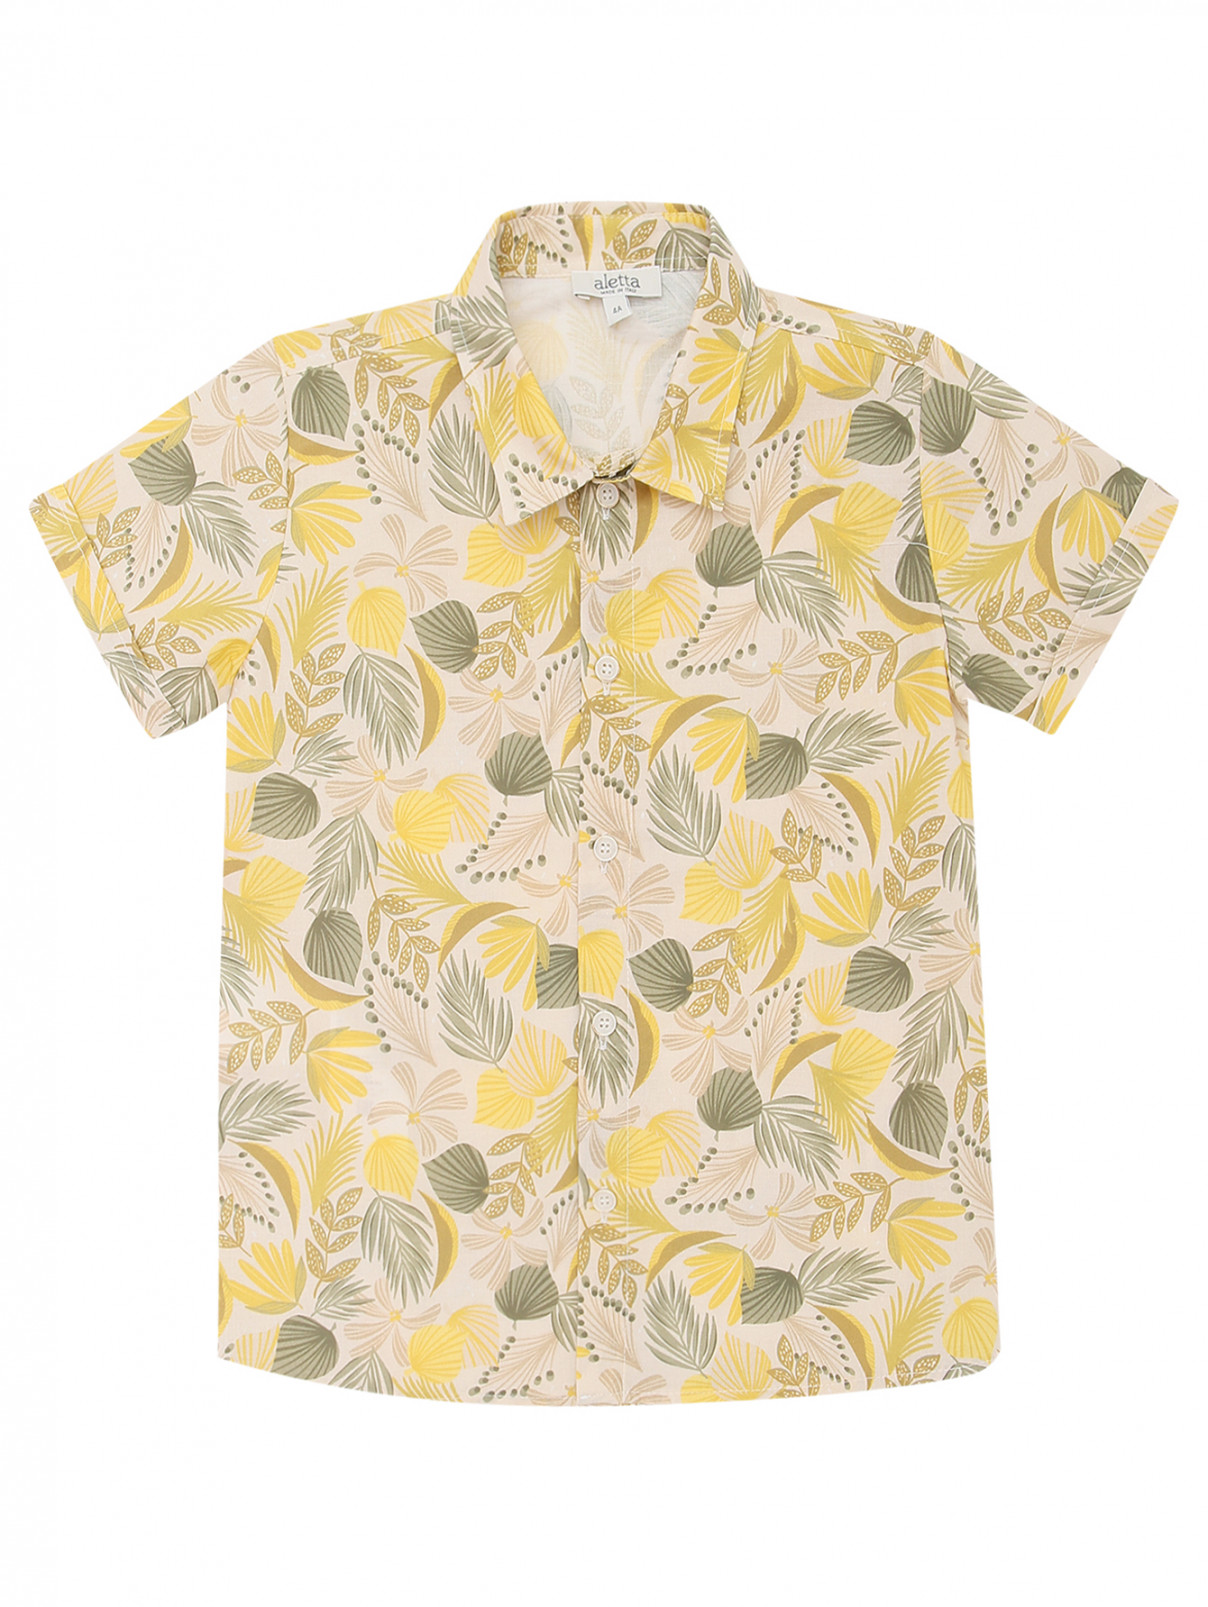 Рубашка на пуговицах с узором Aletta  –  Общий вид  – Цвет:  Узор